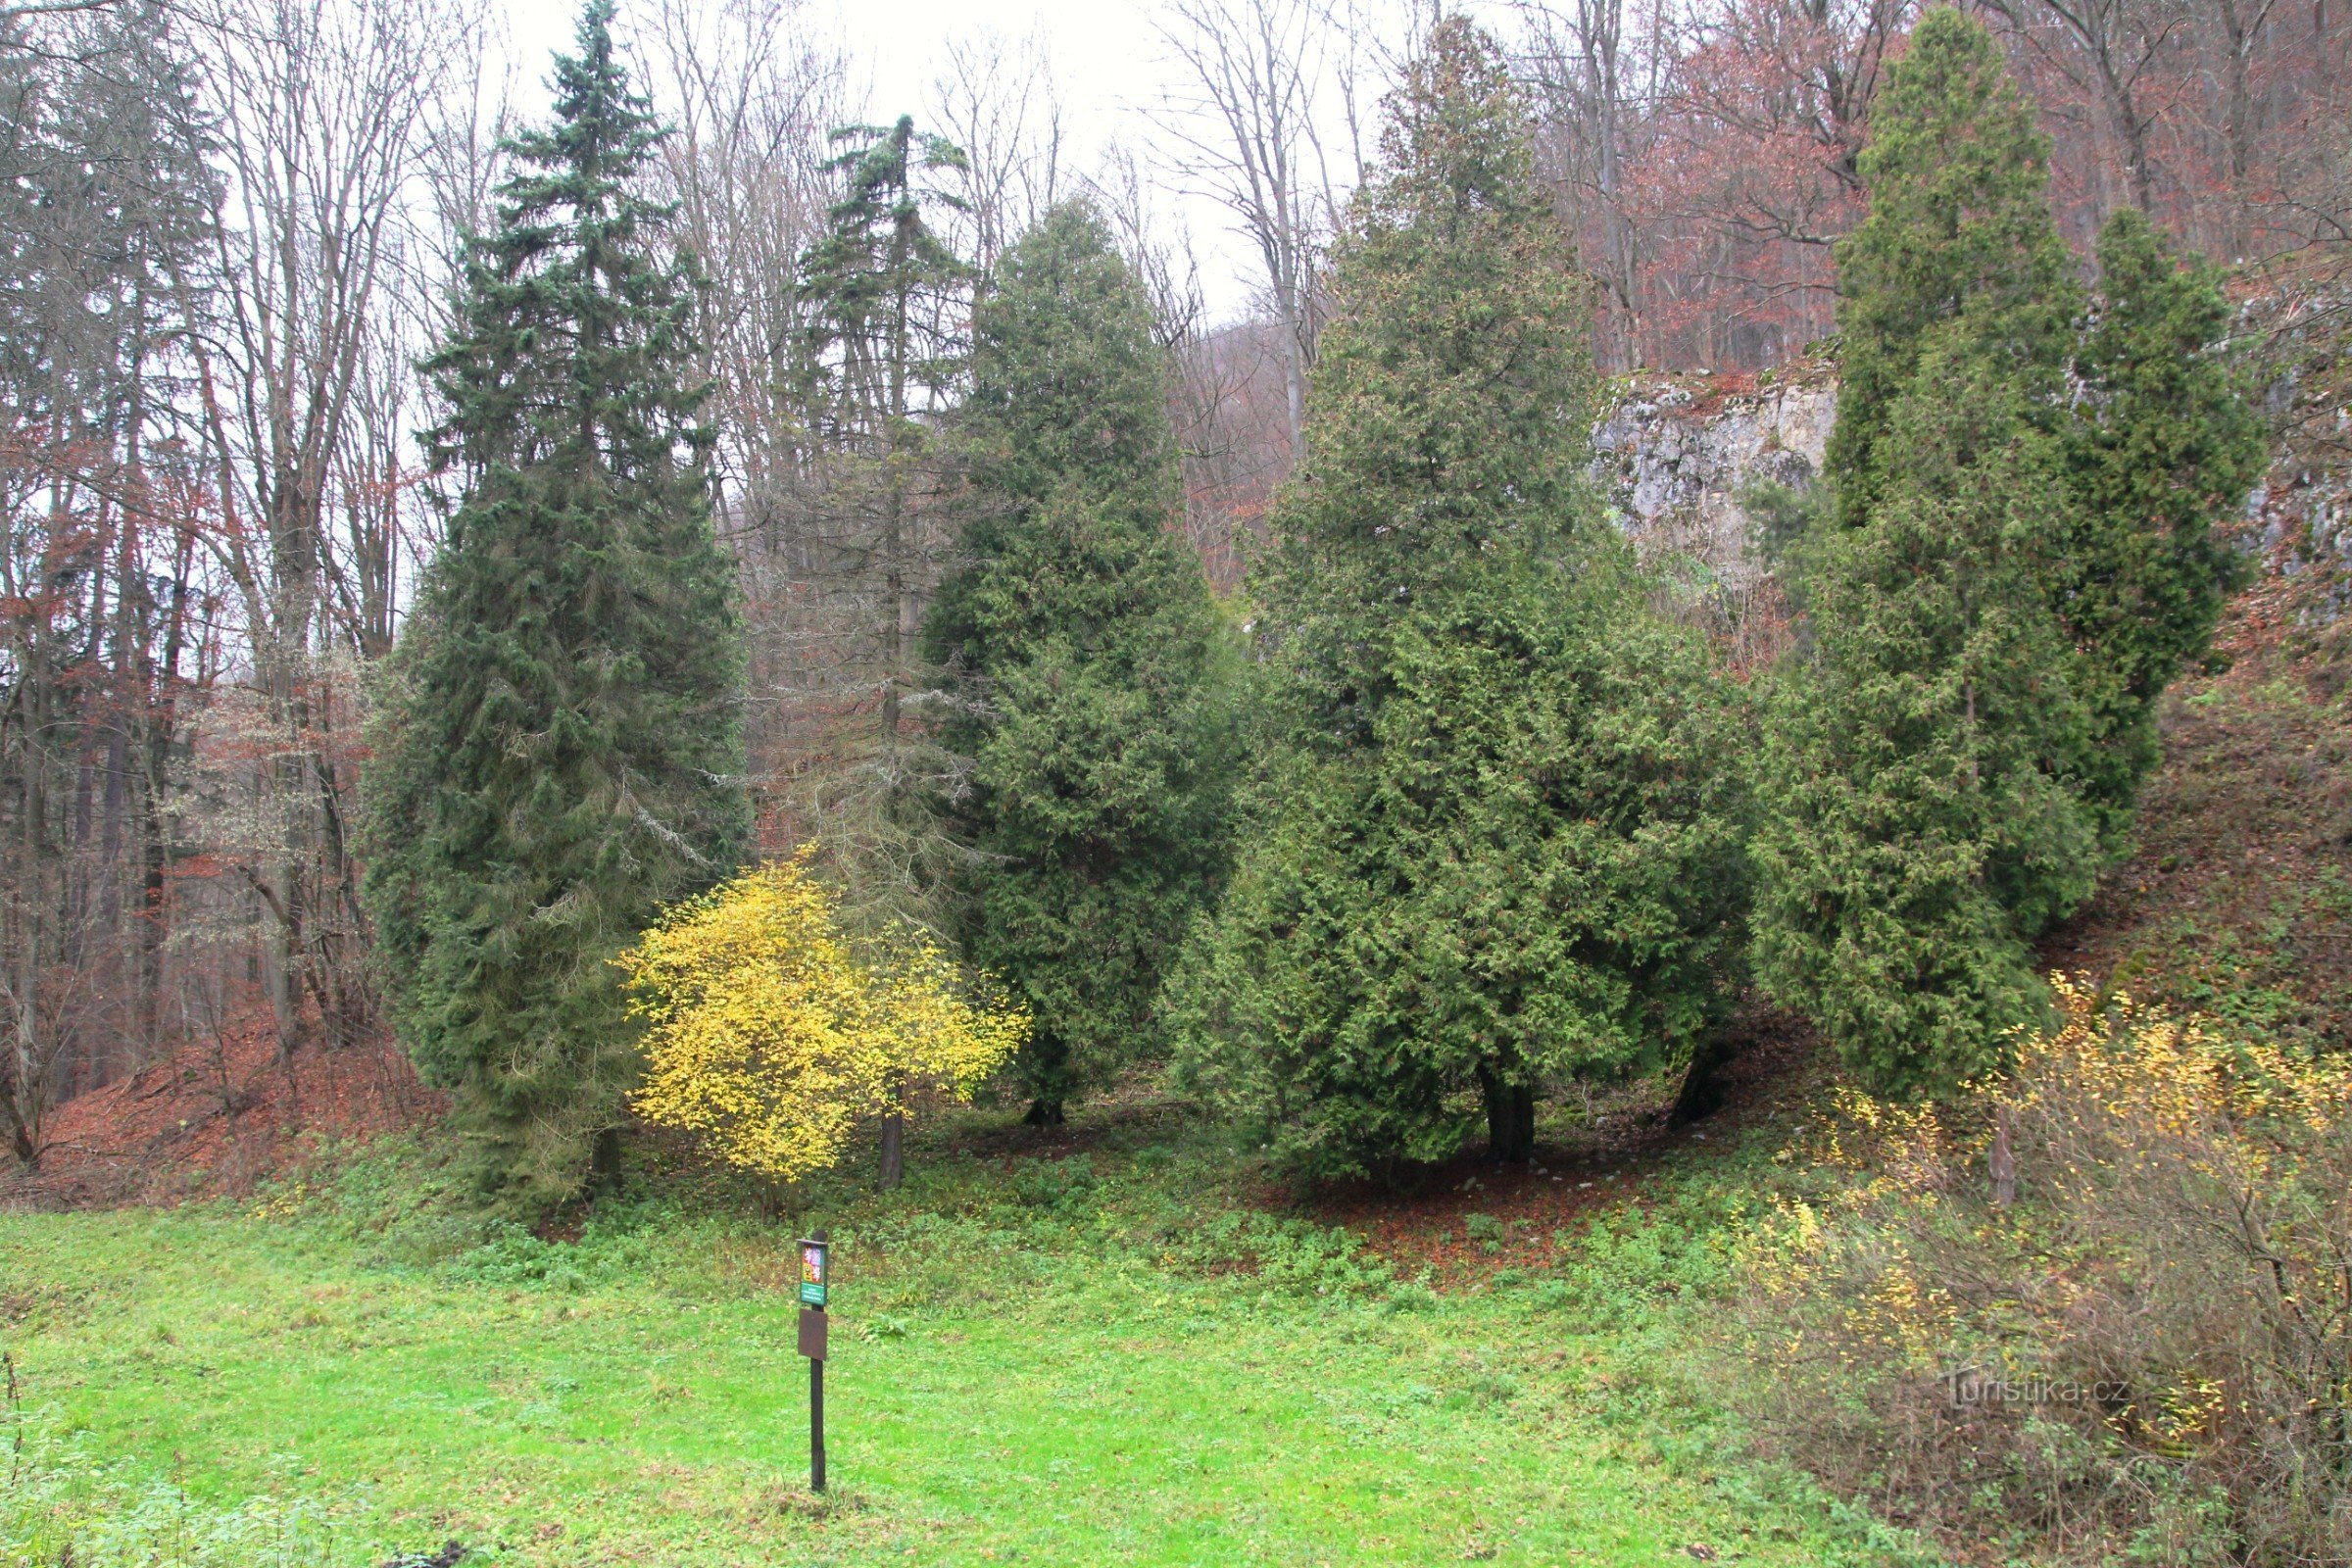 Ornamental trees at the foot of the Padouch valley below the memorial česka